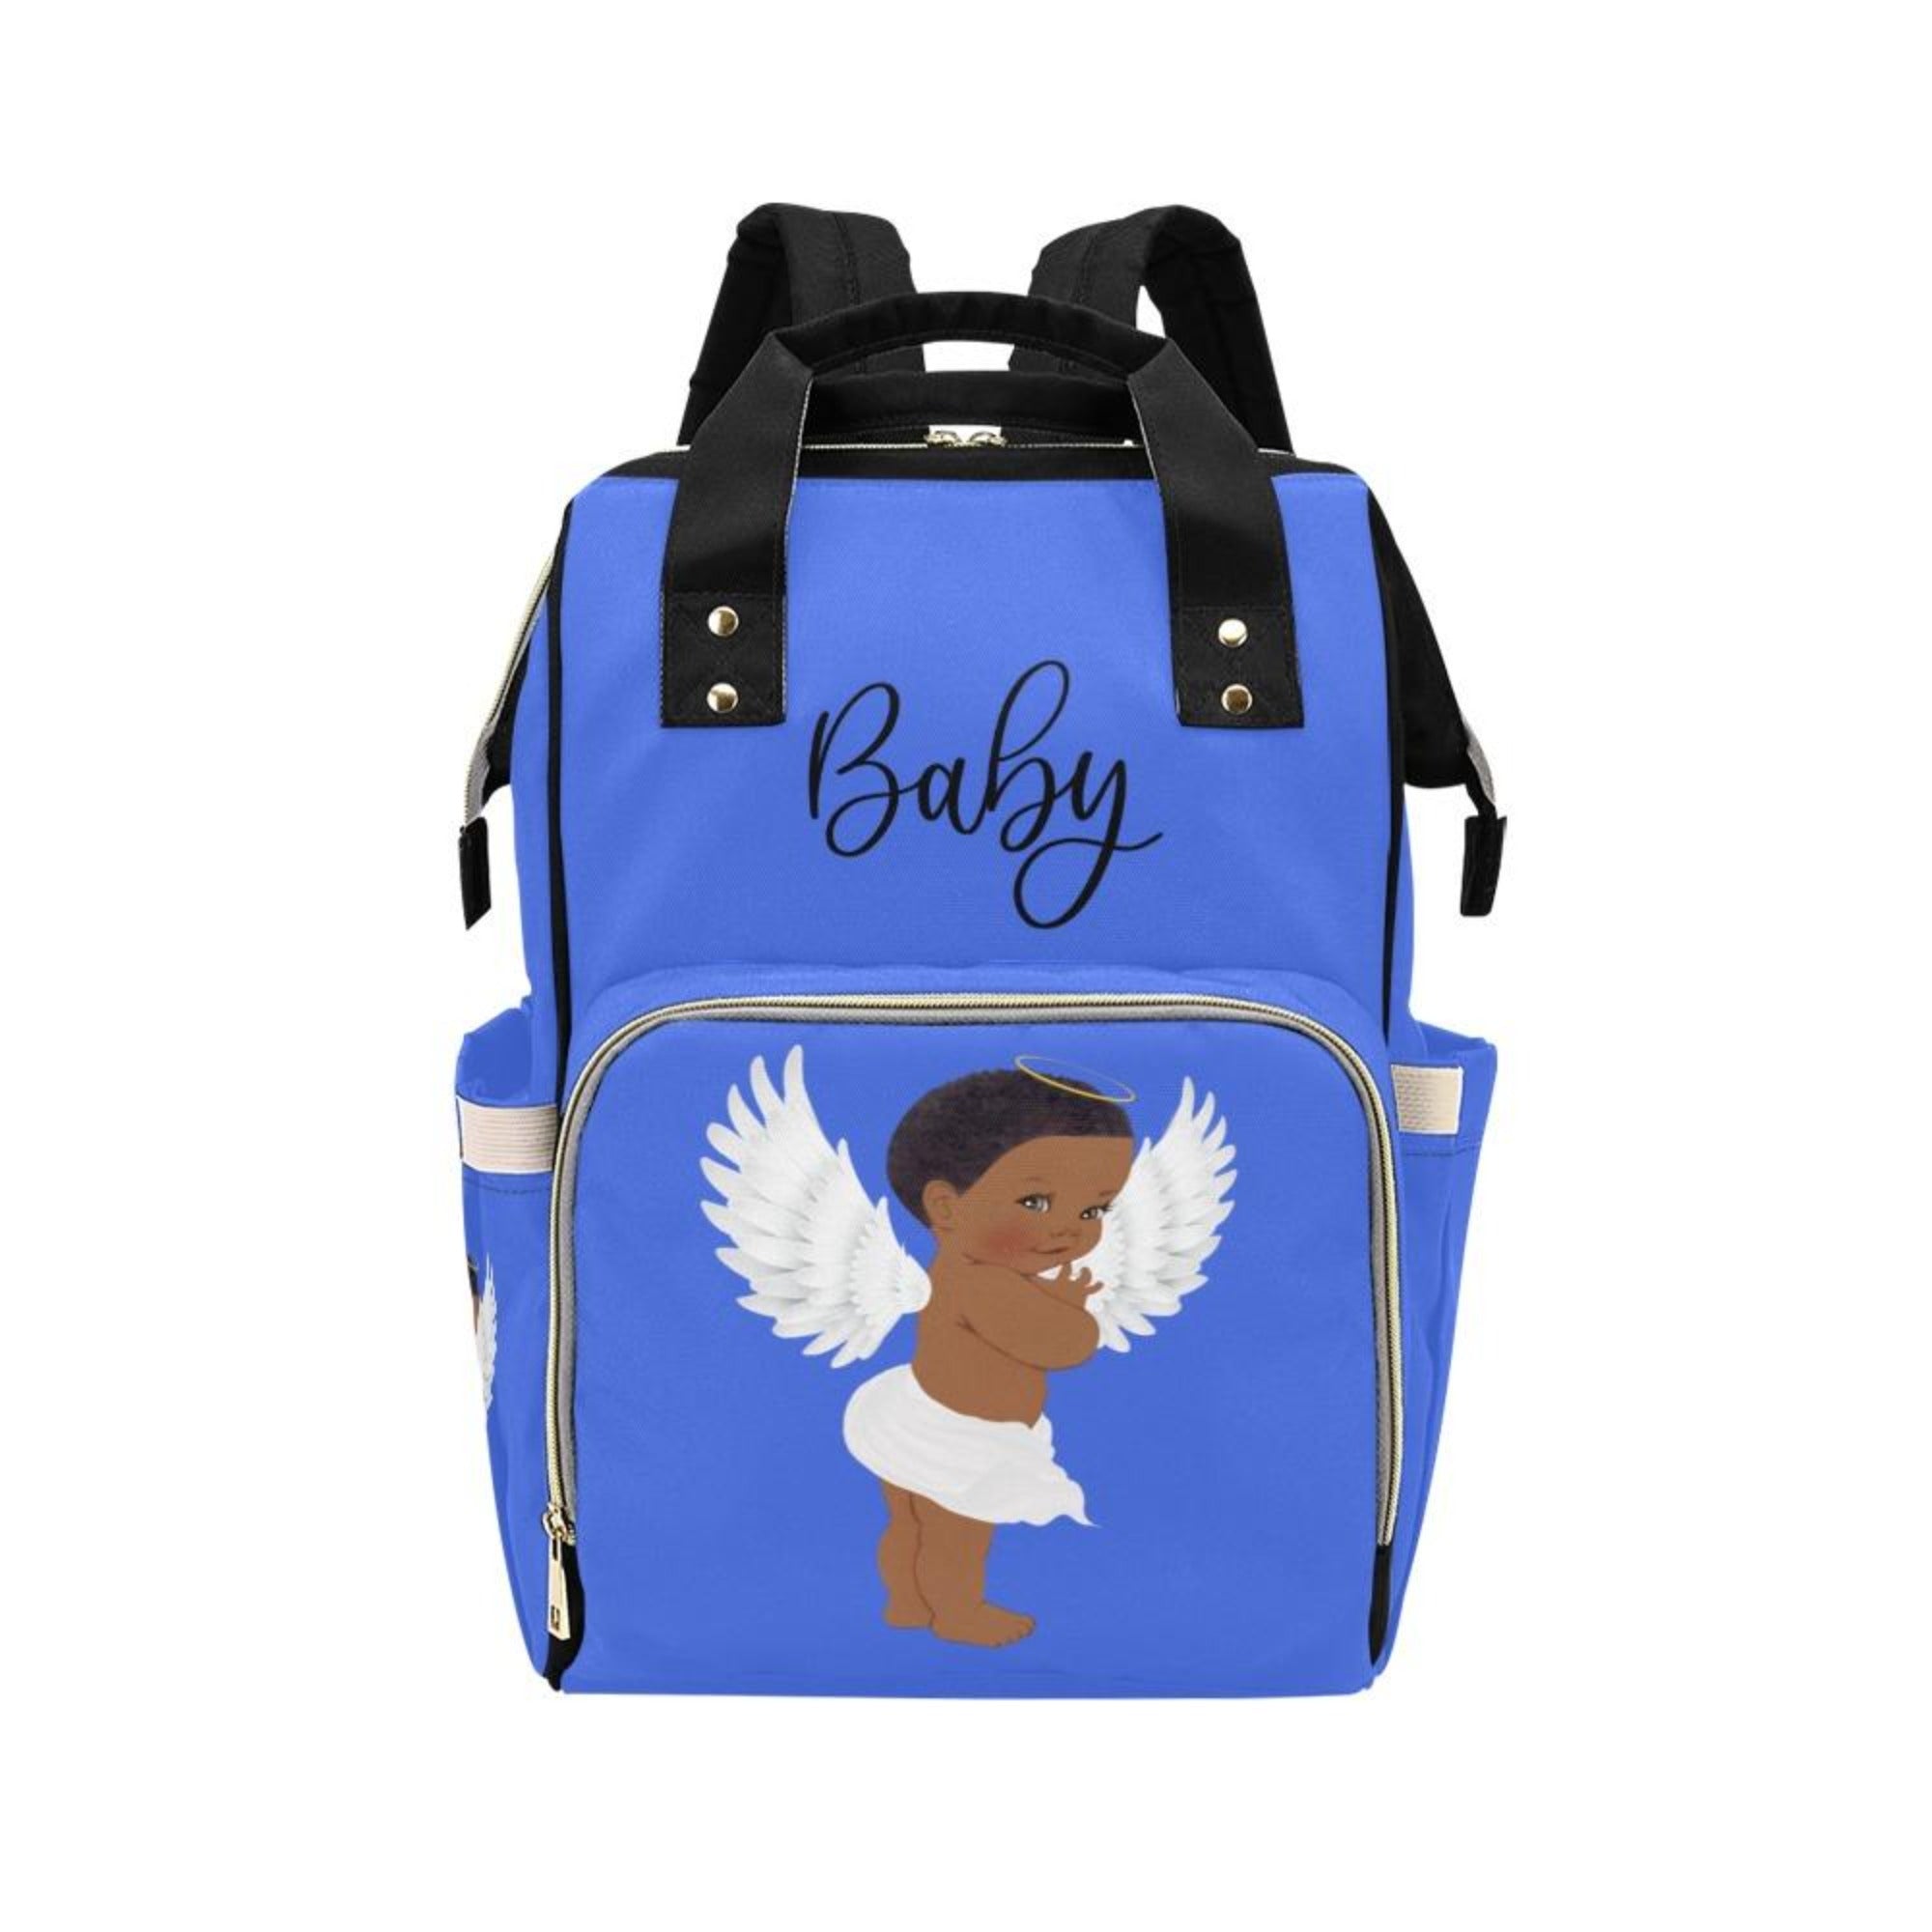 Designer Diaper Bag - Angel African American Baby Boy - Royal Blue Multi-Function Backpack